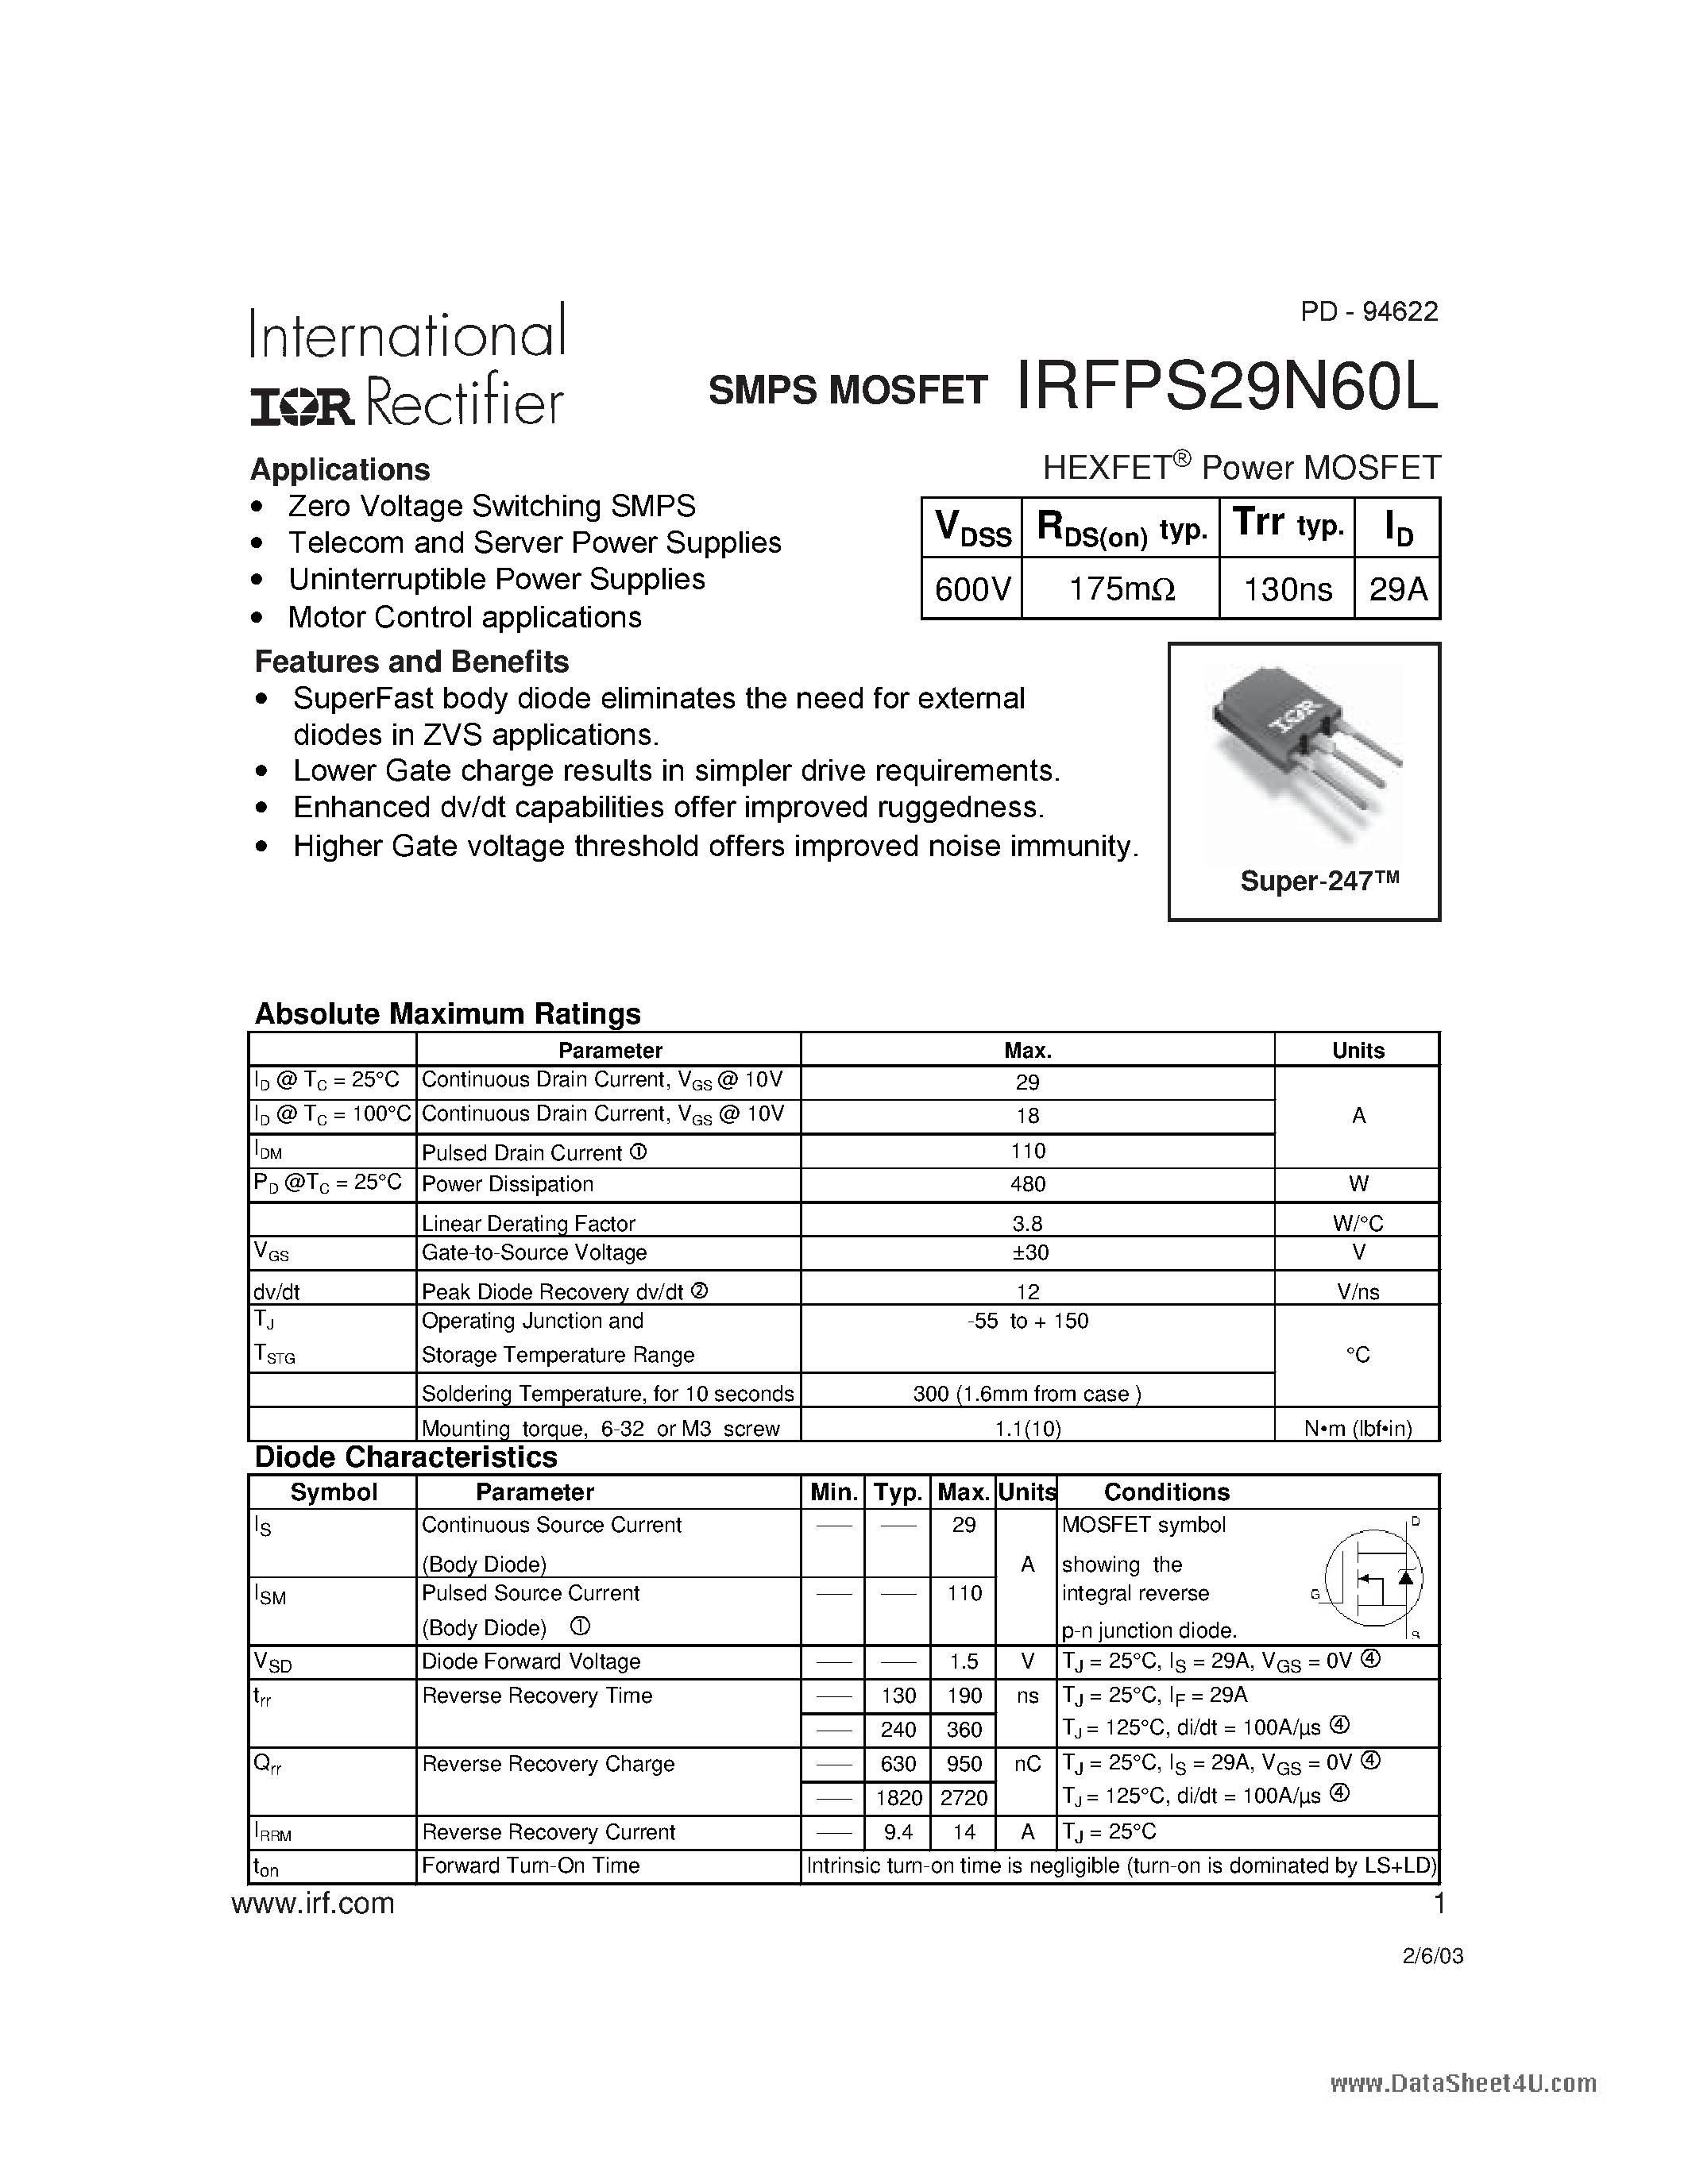 Даташит IRFPS29N60L - SMPS MOSFET страница 1